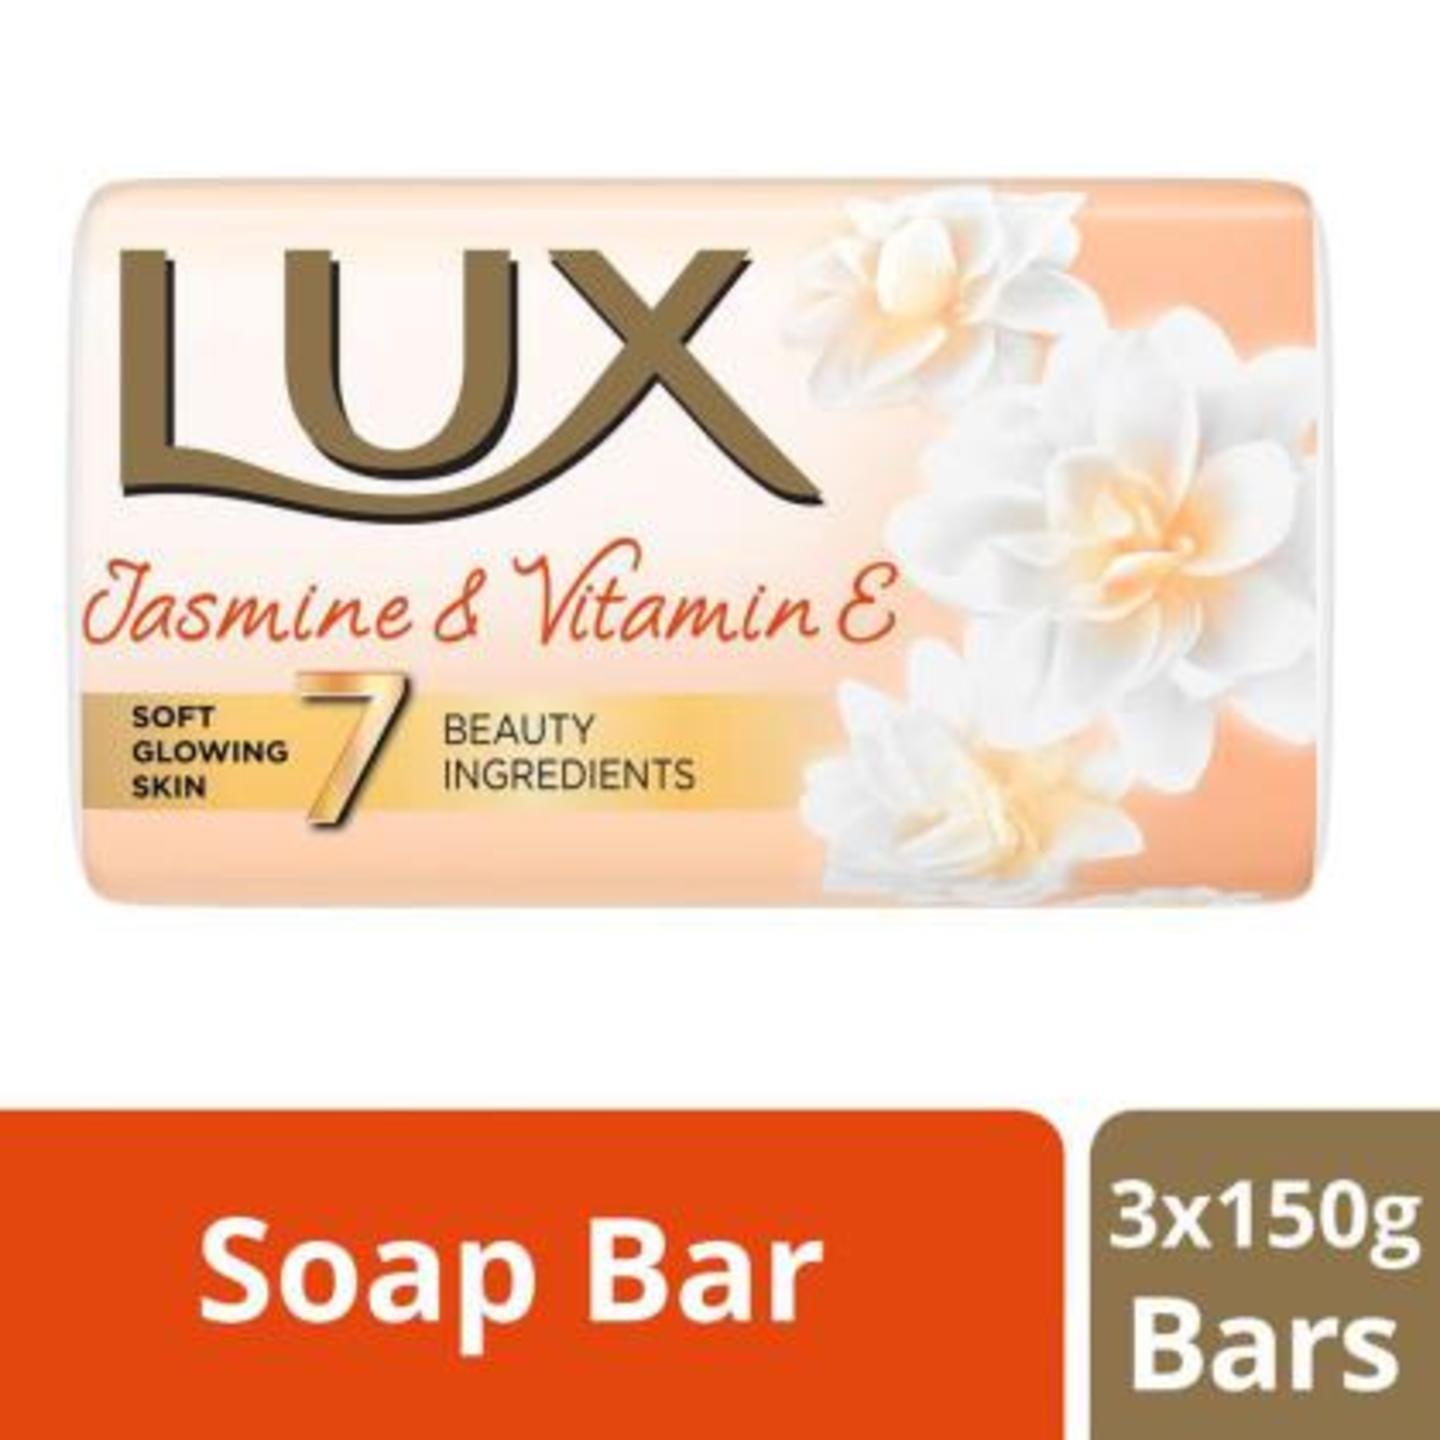 Lux Jasmine & Vitamin E Soft Glowing Skin Soap Bar 150 g Pack of 3